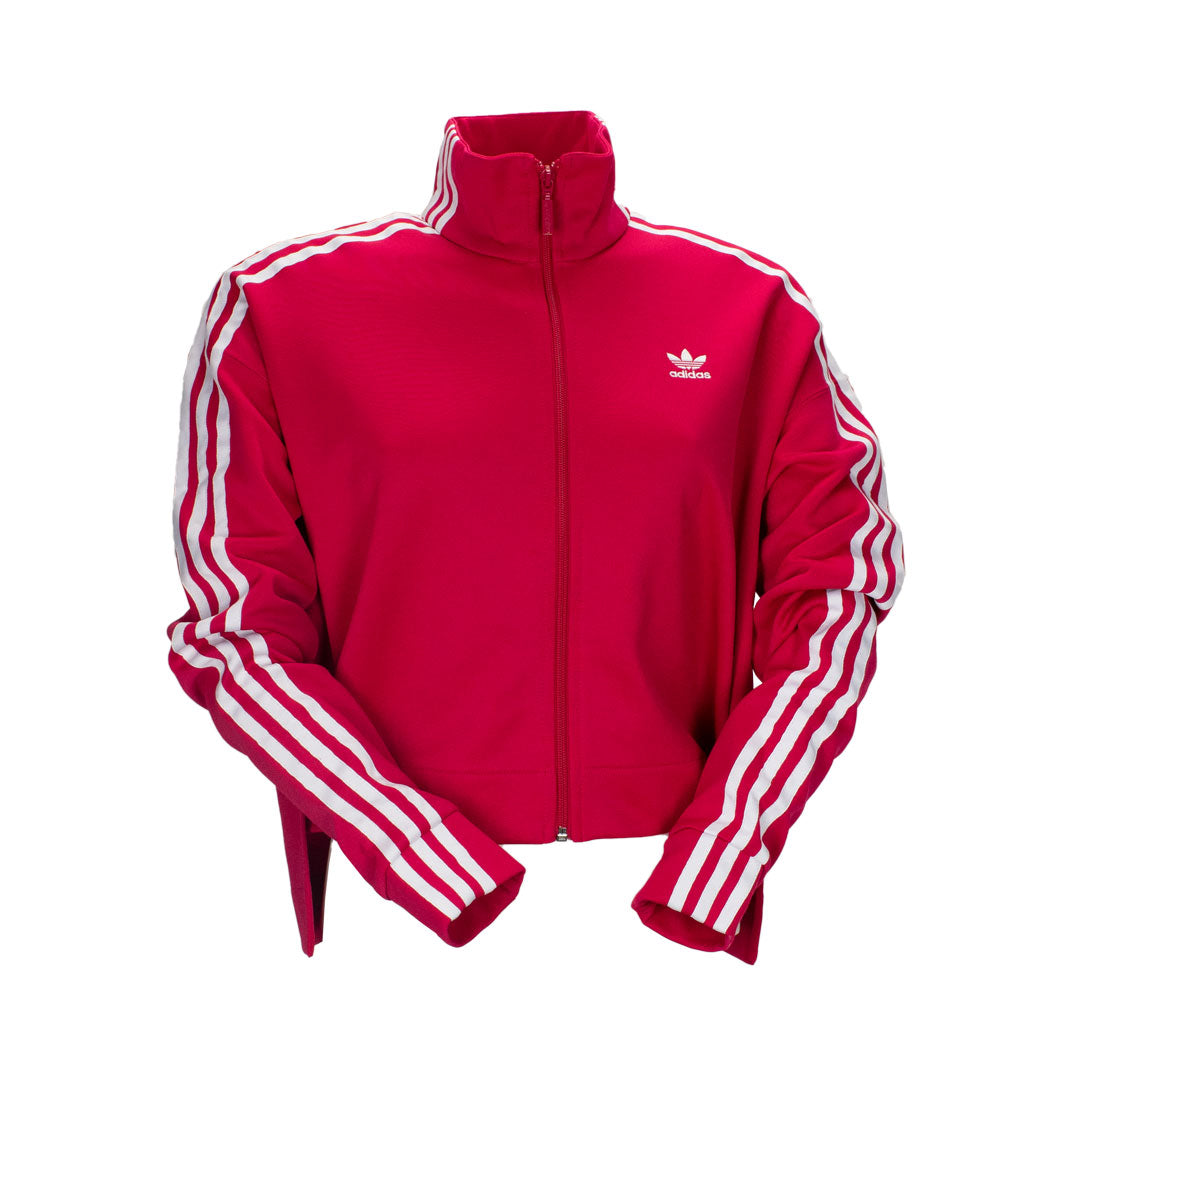 Adidas Originals Tracktop Damen Jacke Sweatjacke Trainingsjacke Pink ED4755